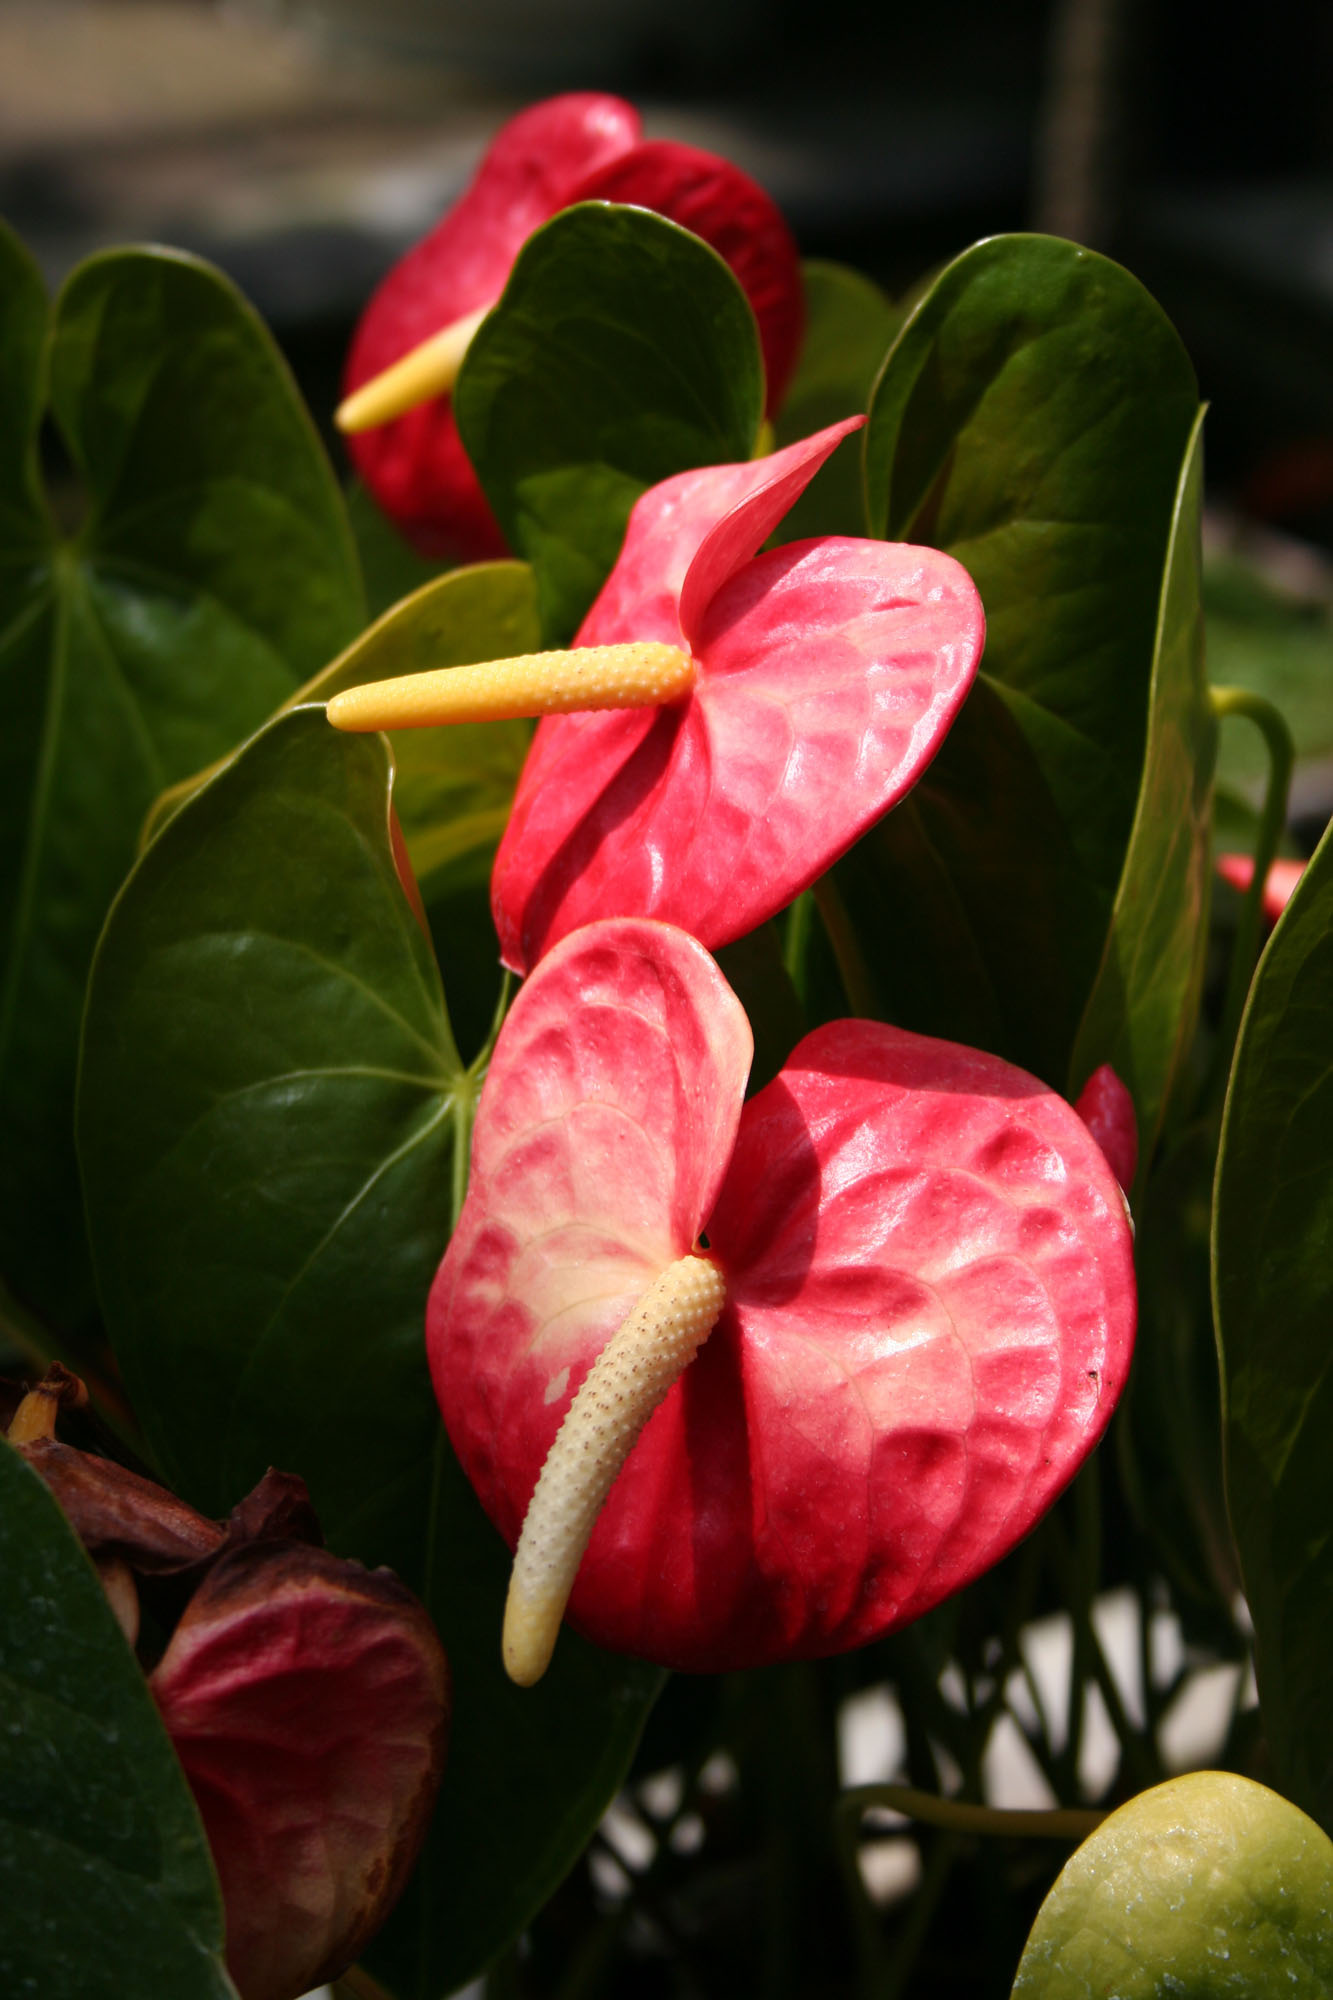 File:Unidentified red flower.jpg - Wikimedia Commons